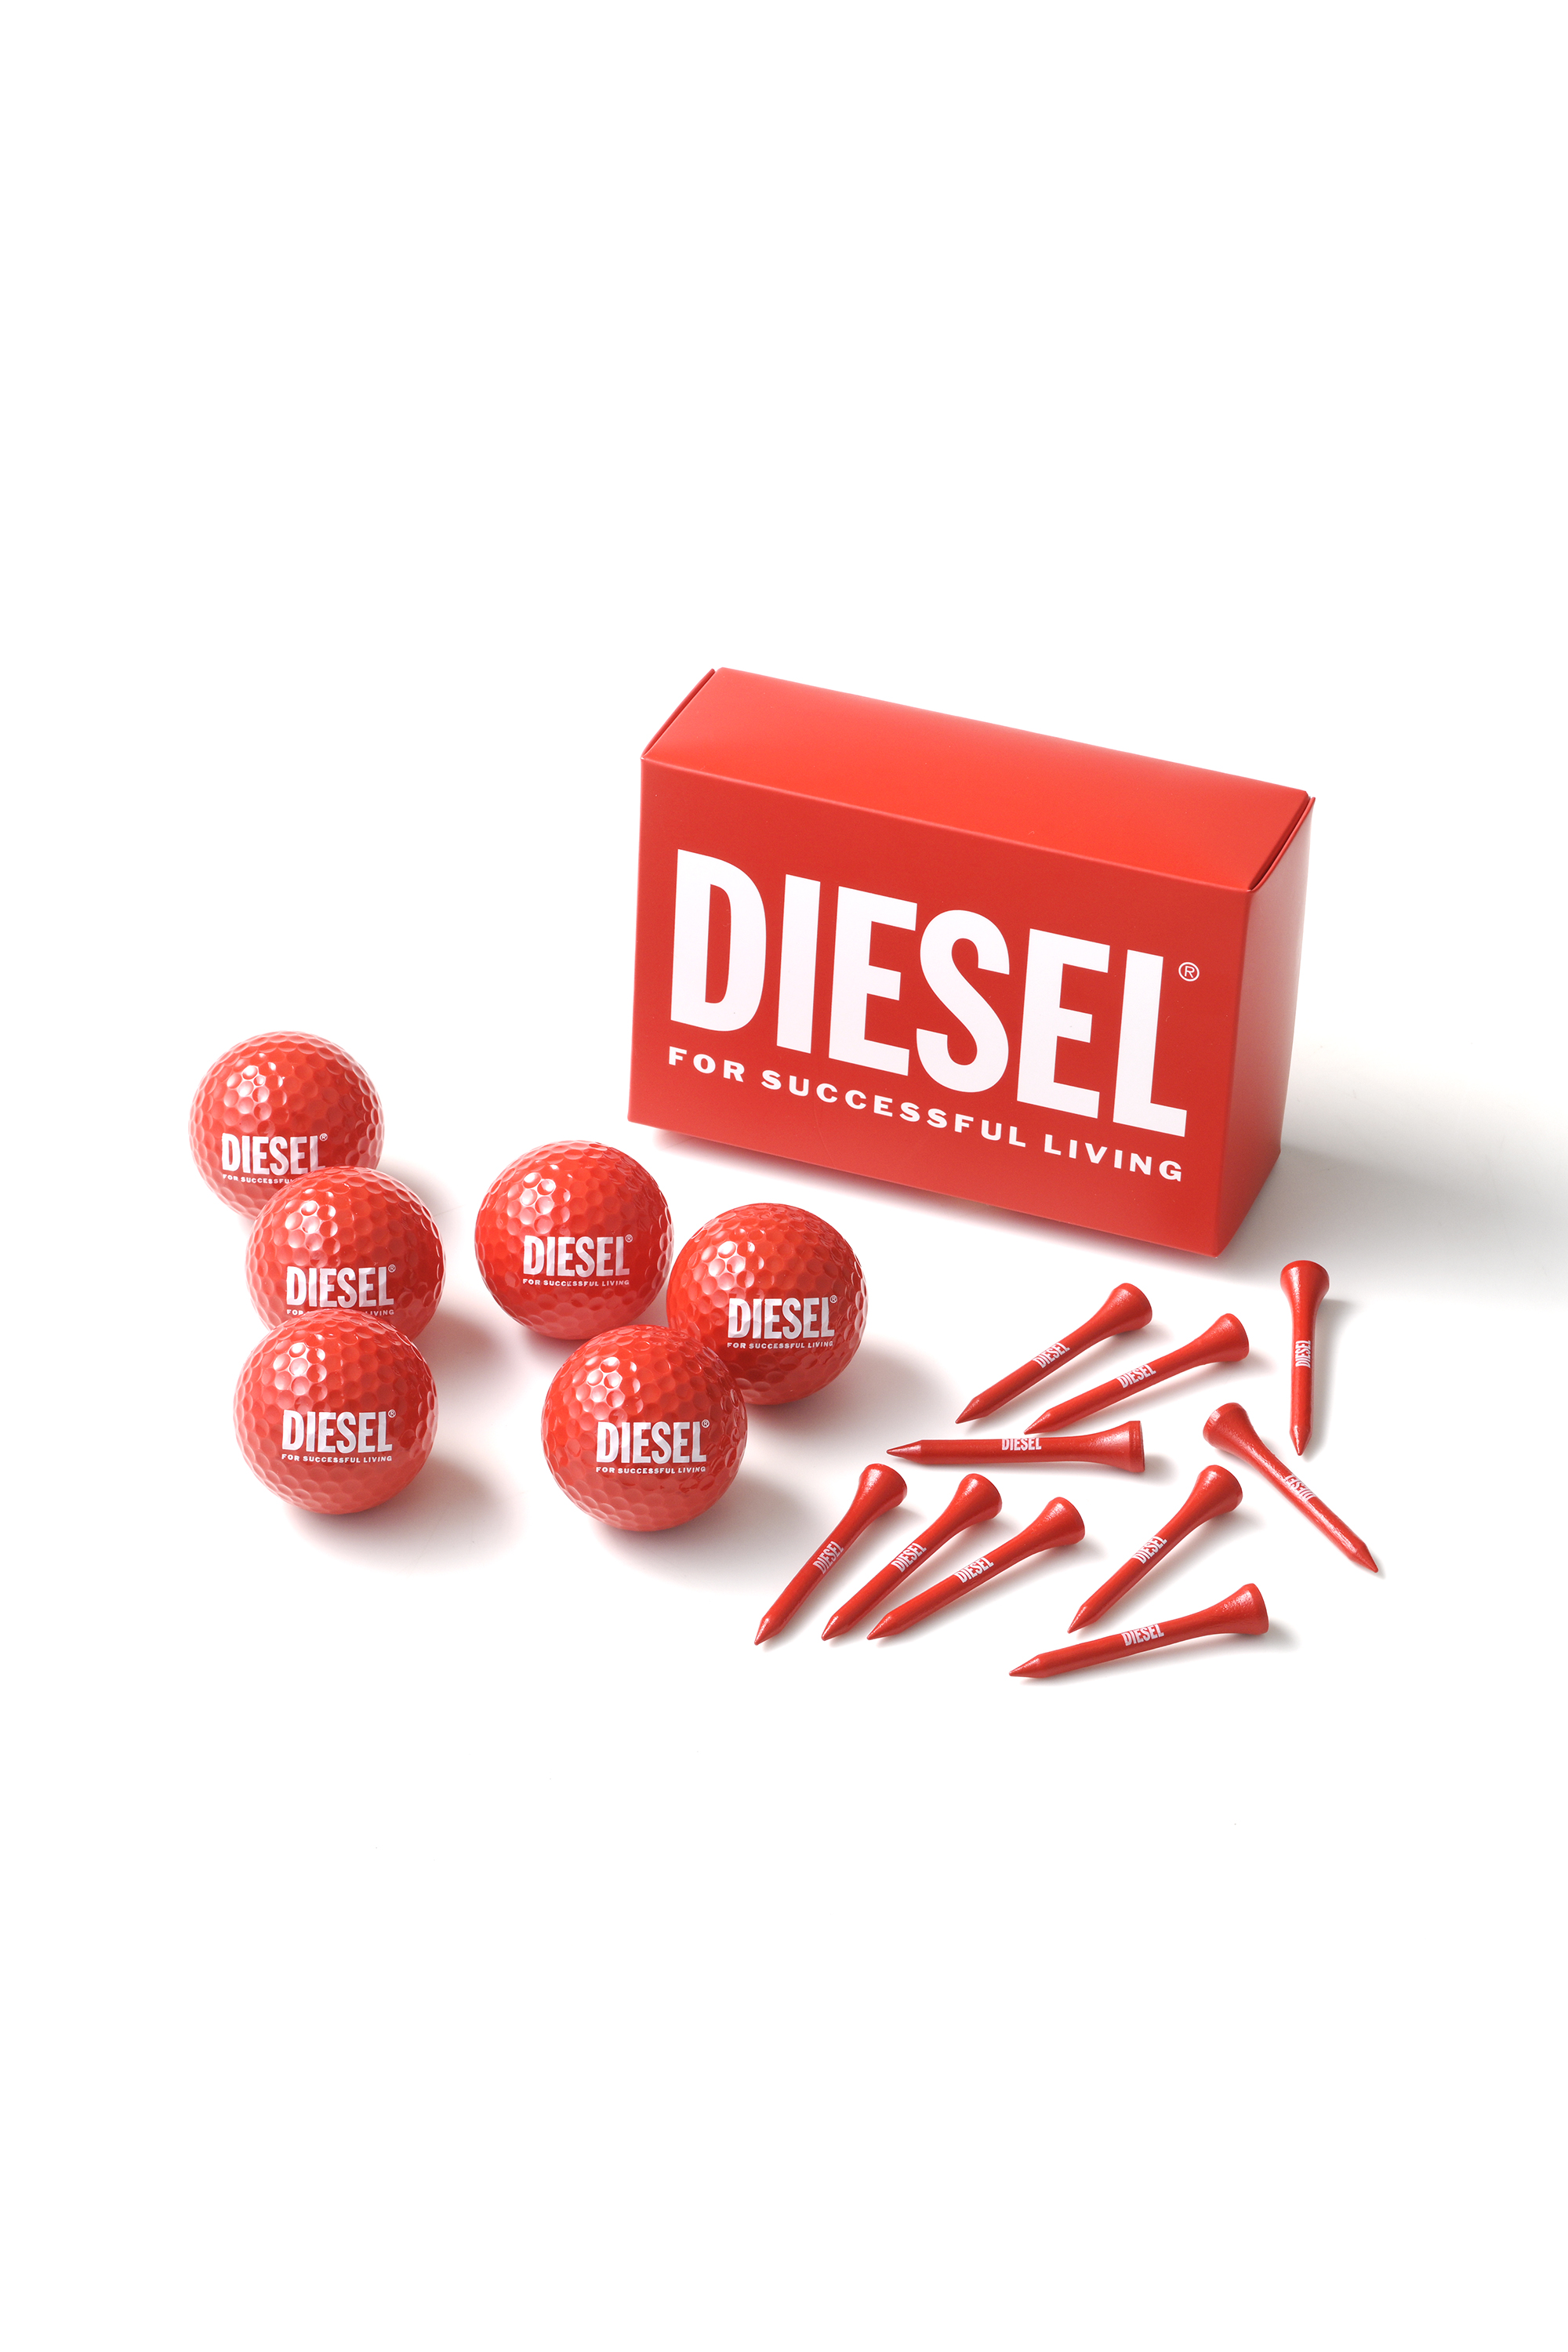 Diesel - GOLF BALL SET, レッド - Image 1